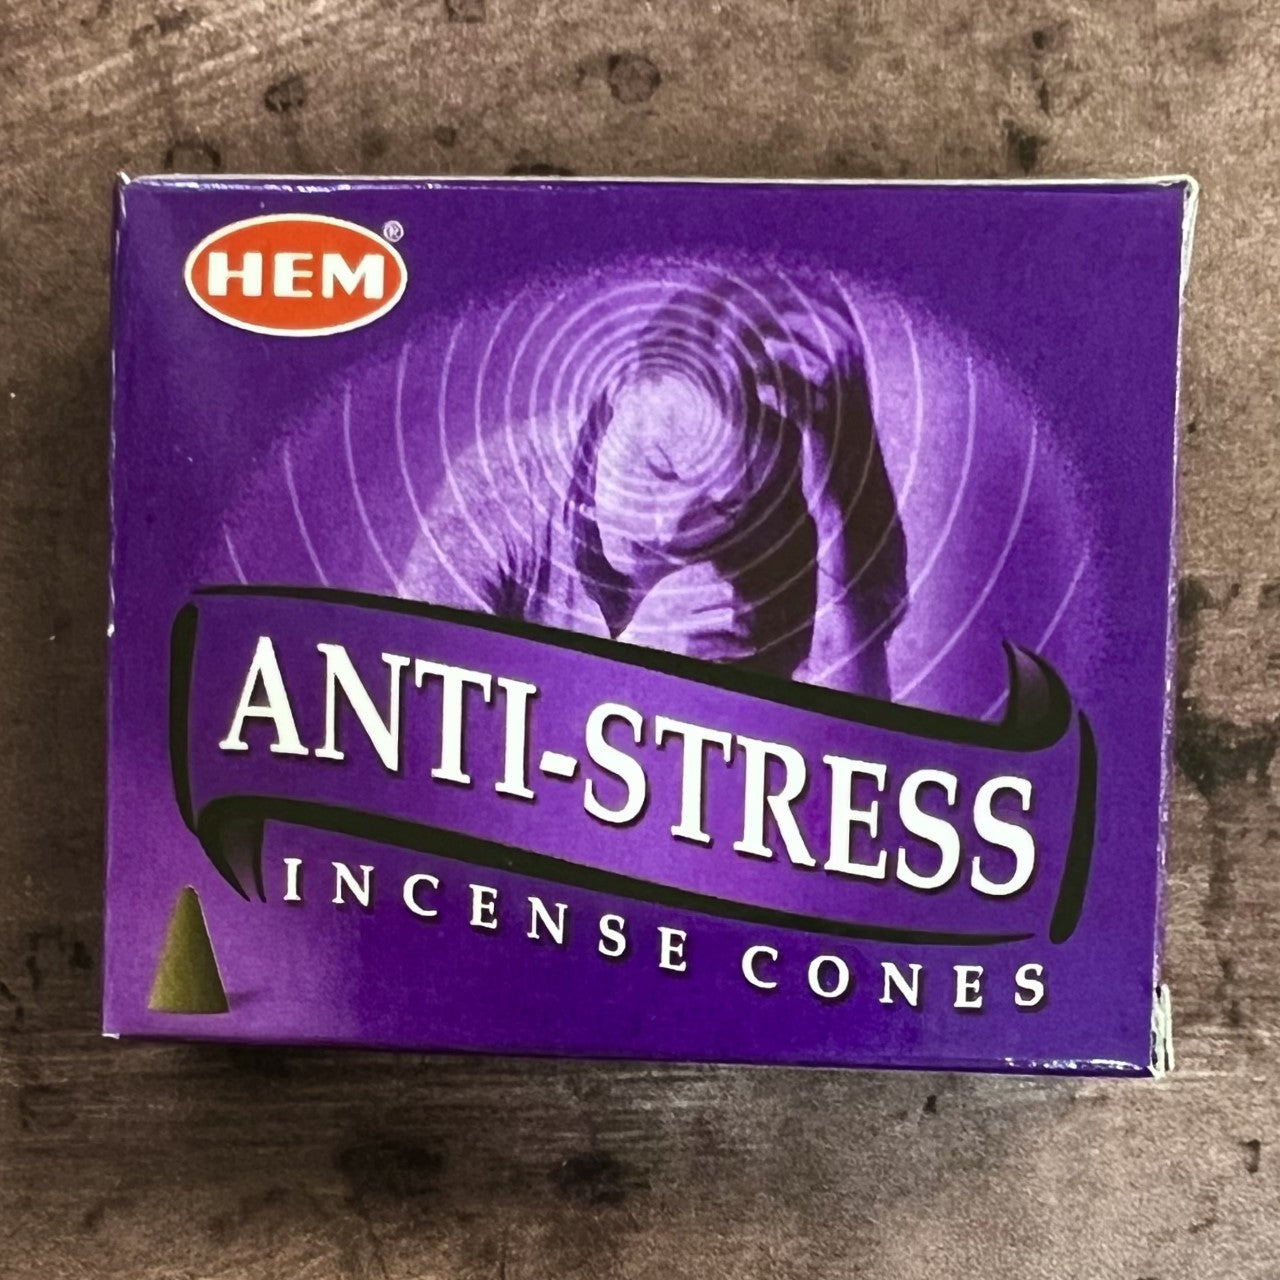 Hem Anti Stress Cones